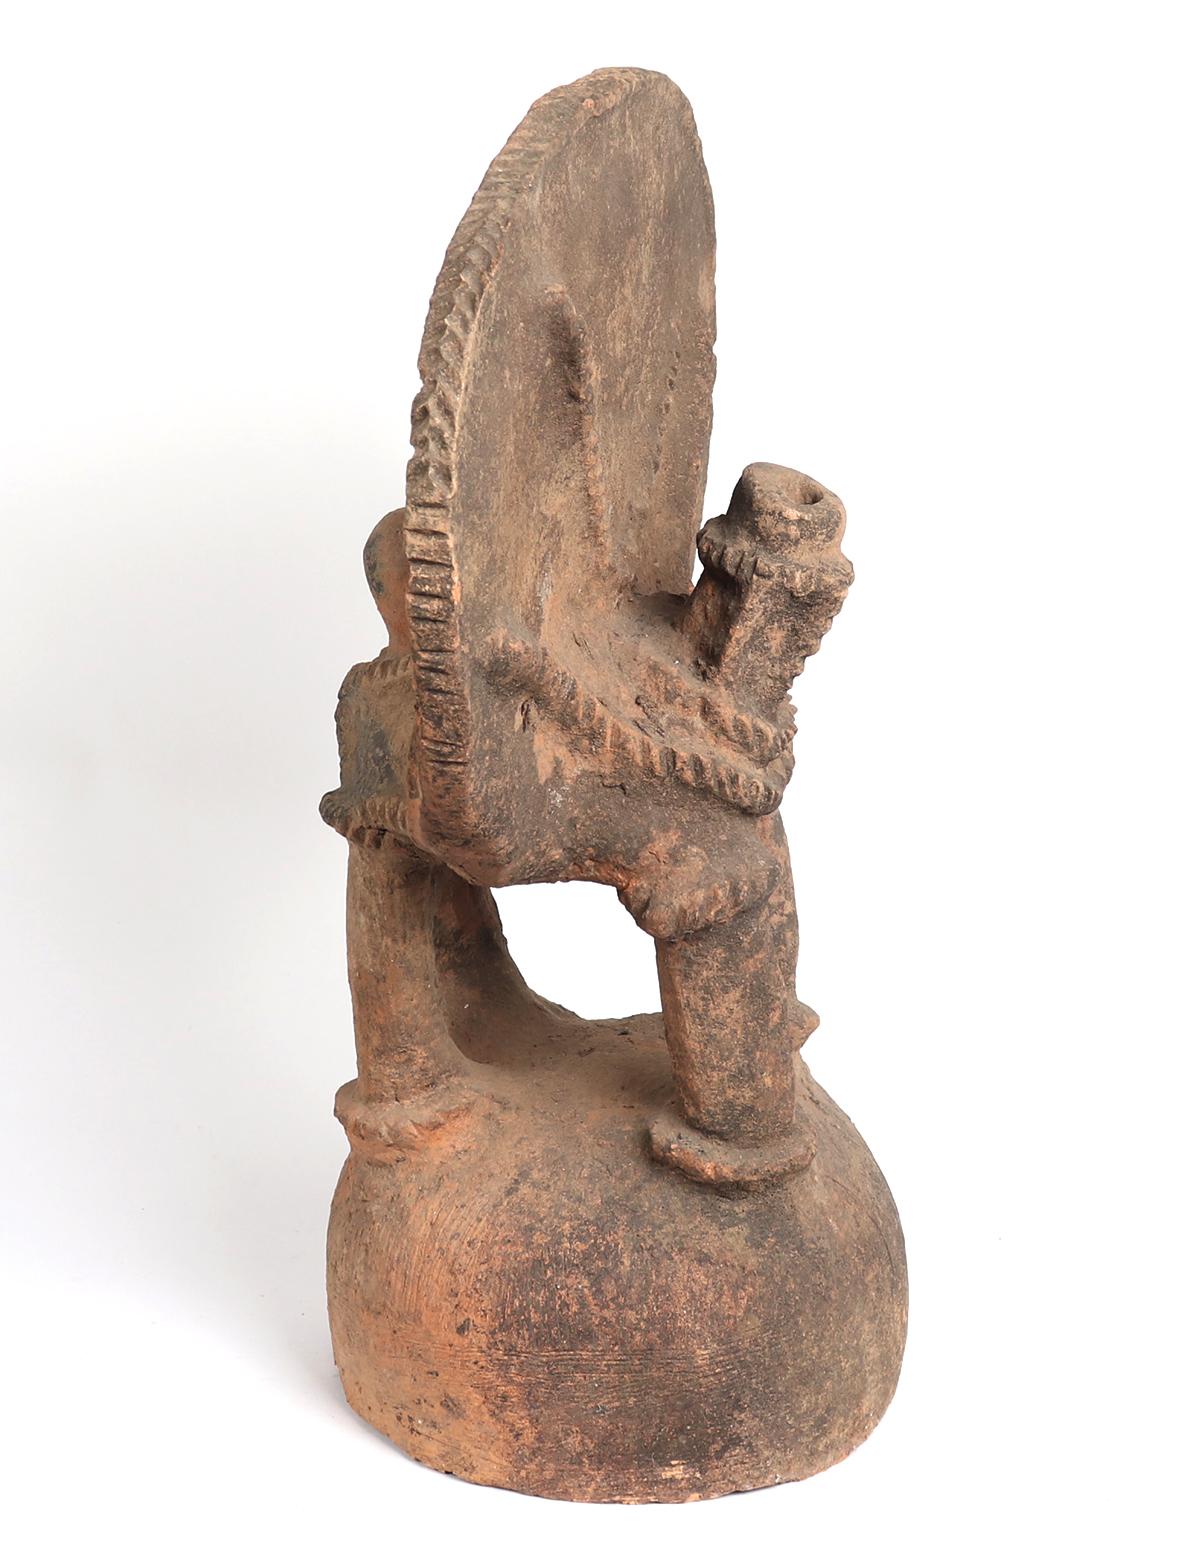 African Ceramic Funerary Marker